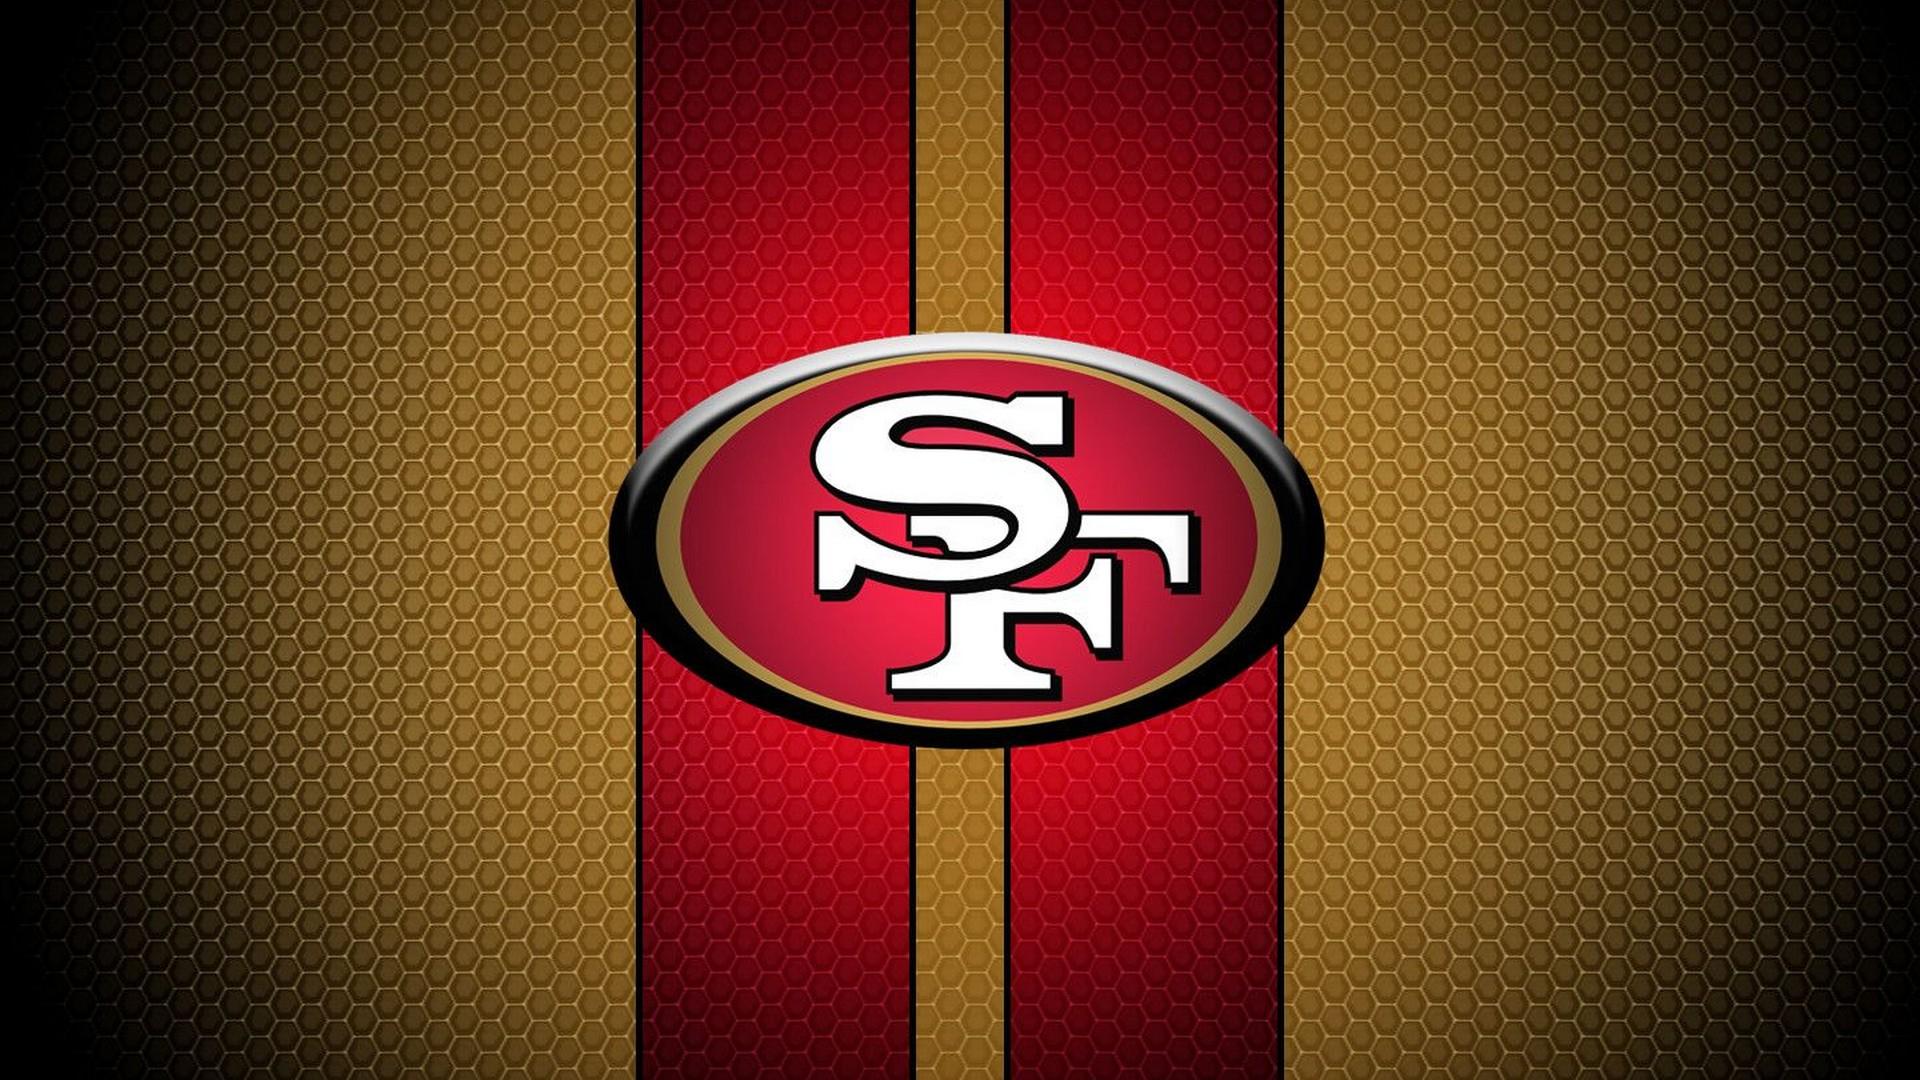 San Francisco 49ers For PC Wallpaper NFL Football Wallpaper